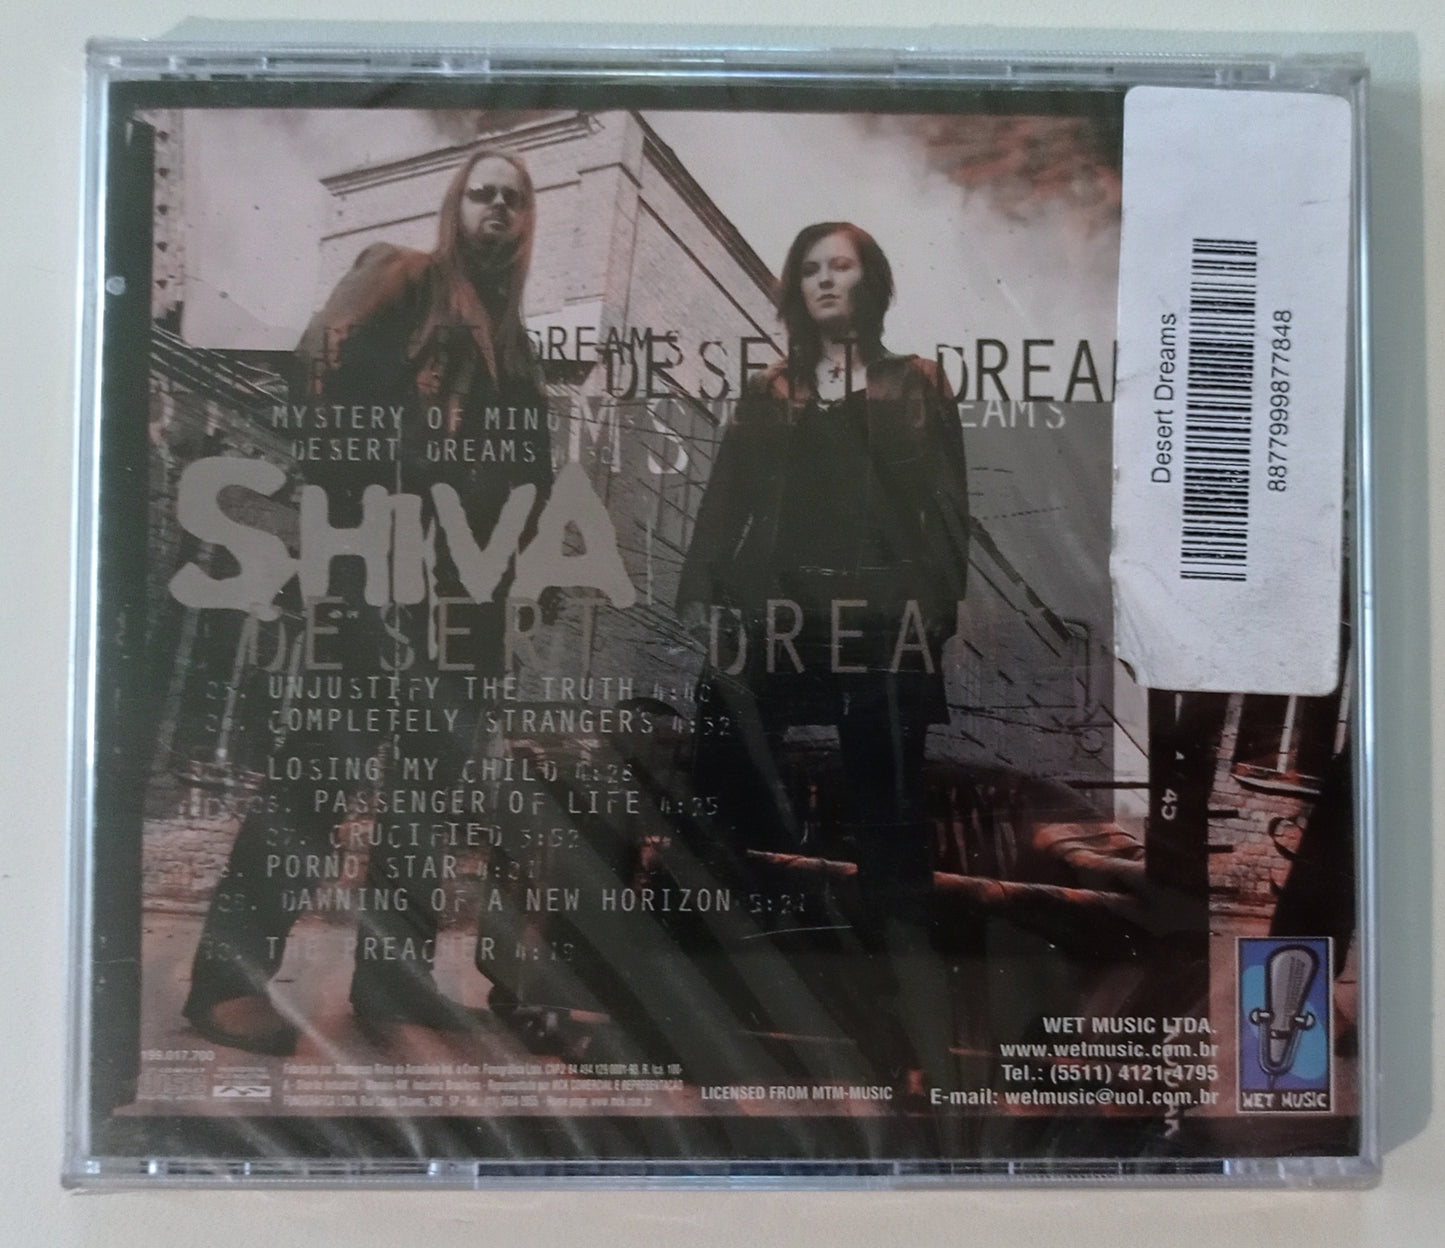 Shiva - Desert Dreams (CD Nacional - LACRADO)